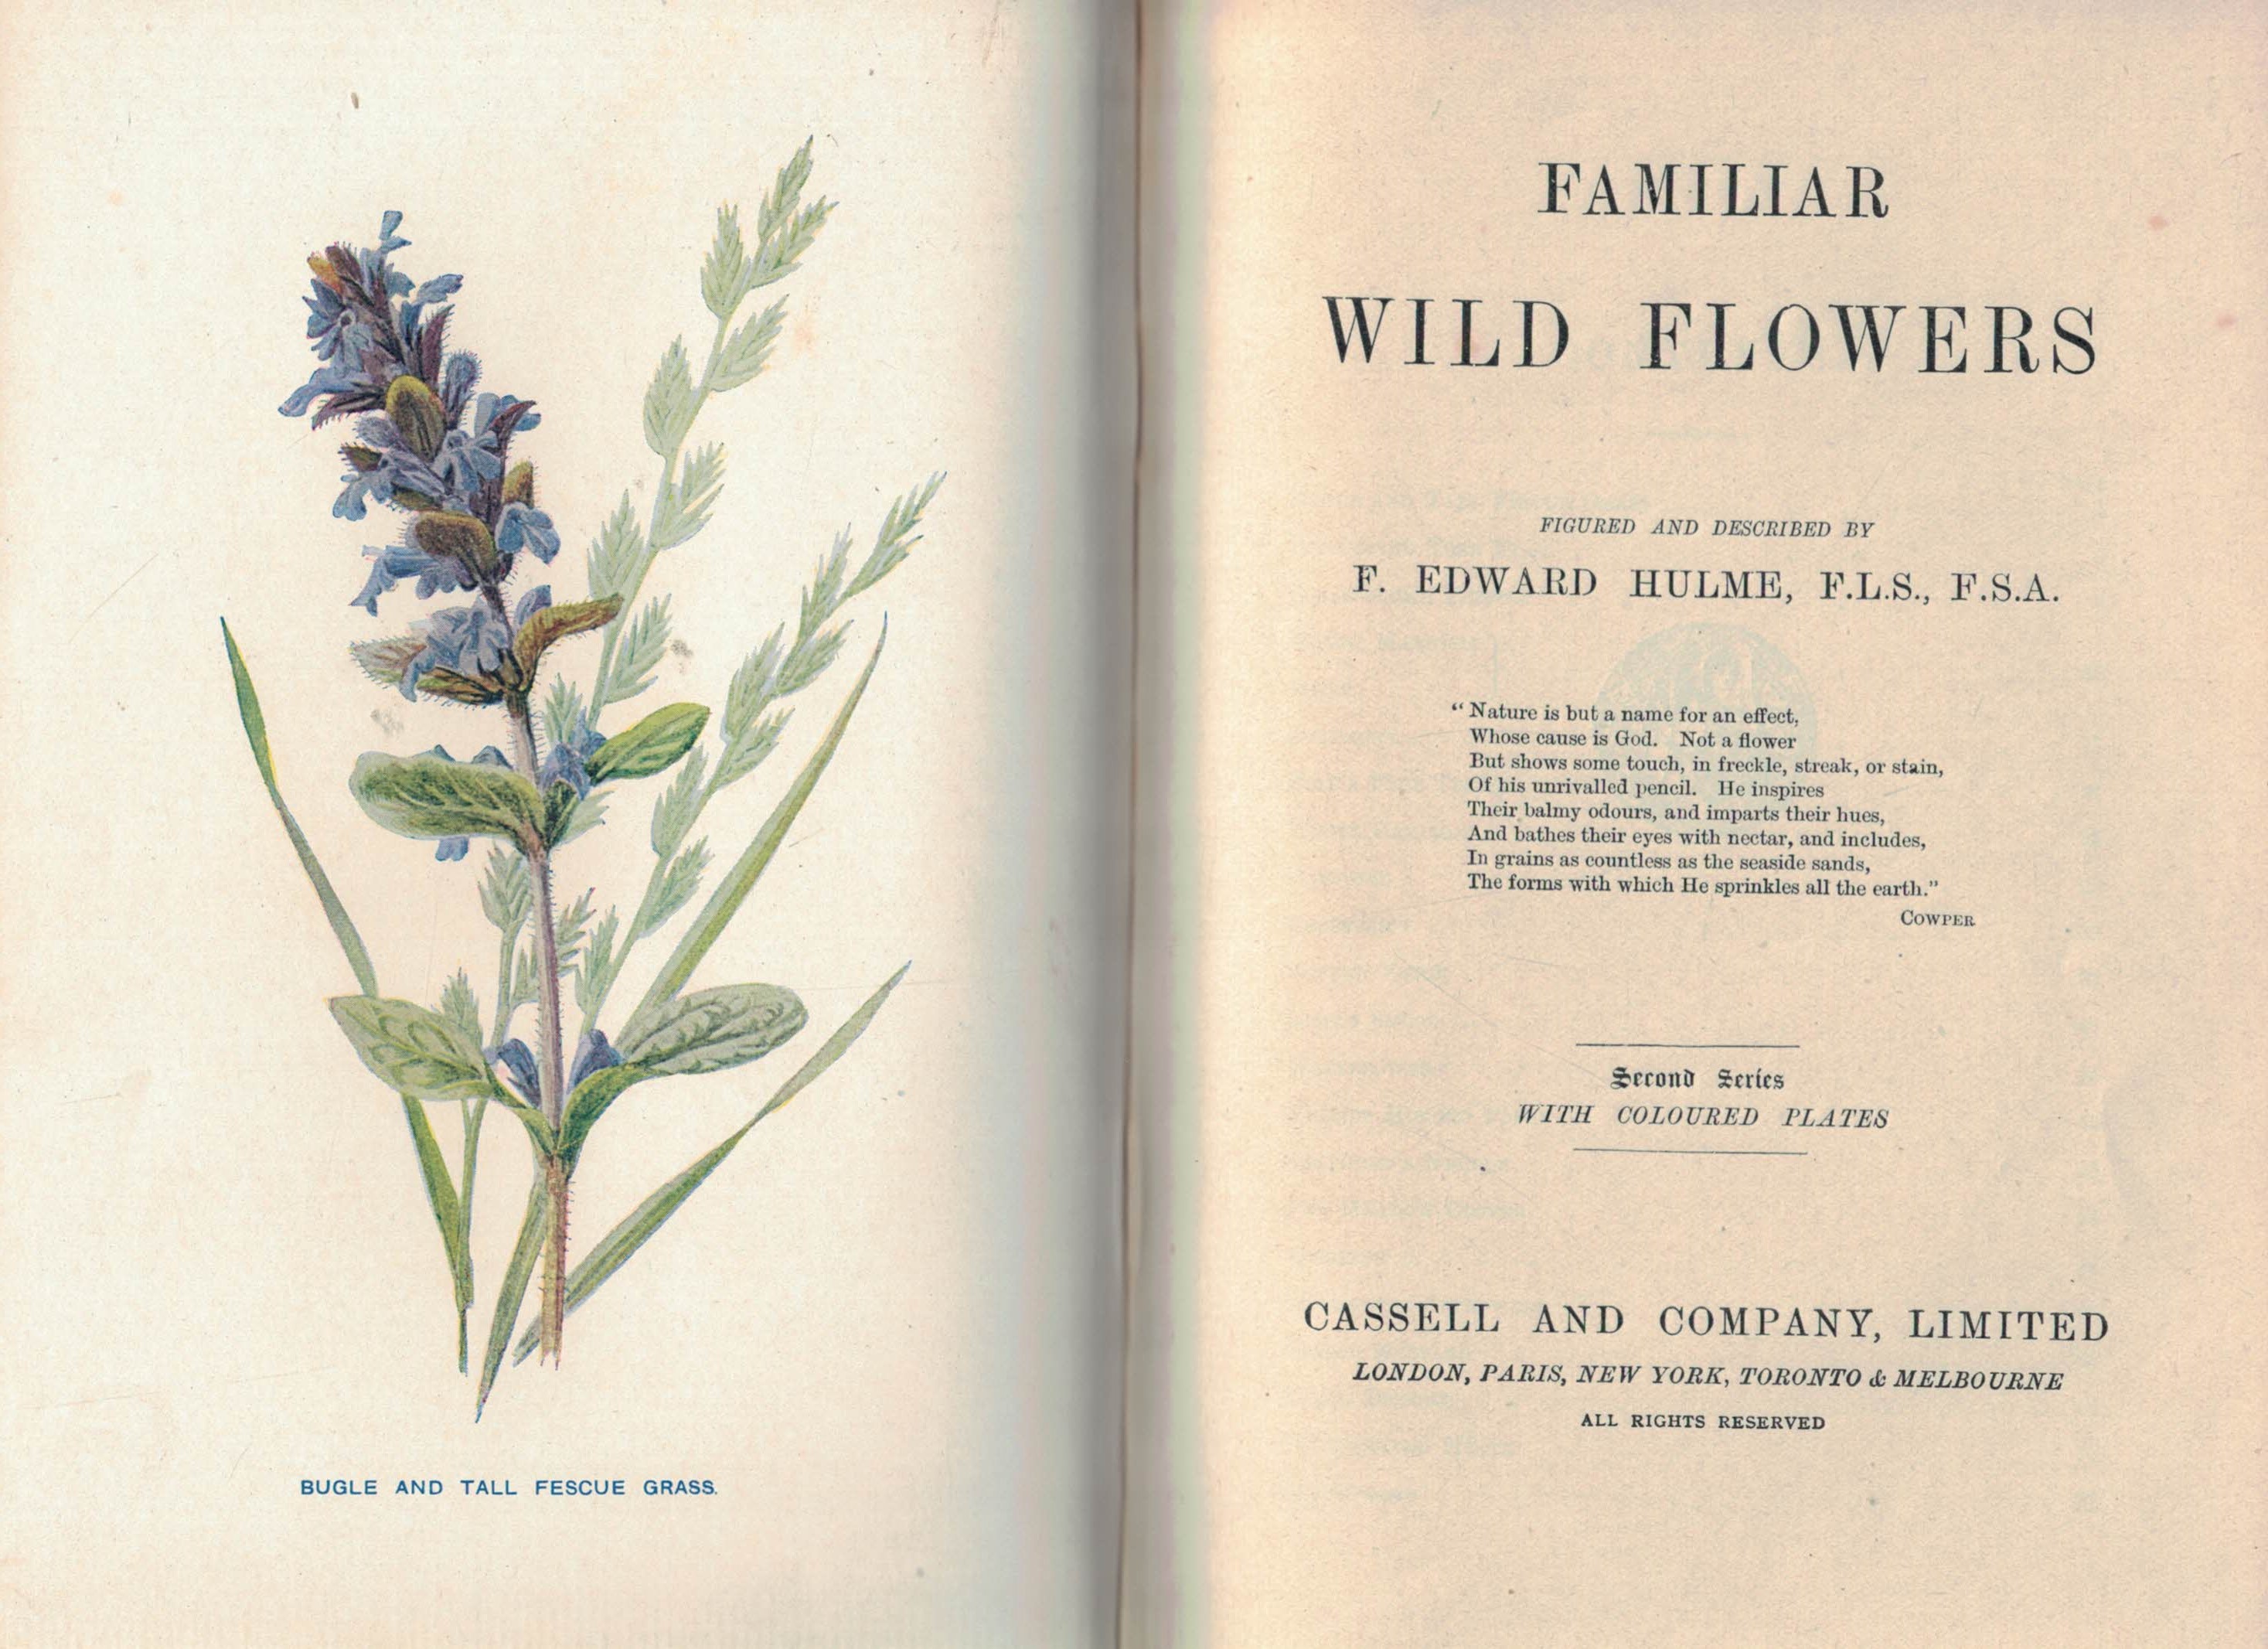 Familiar Wild Flowers - Series 1 to 8 bound in a 4 volume set. 1905.